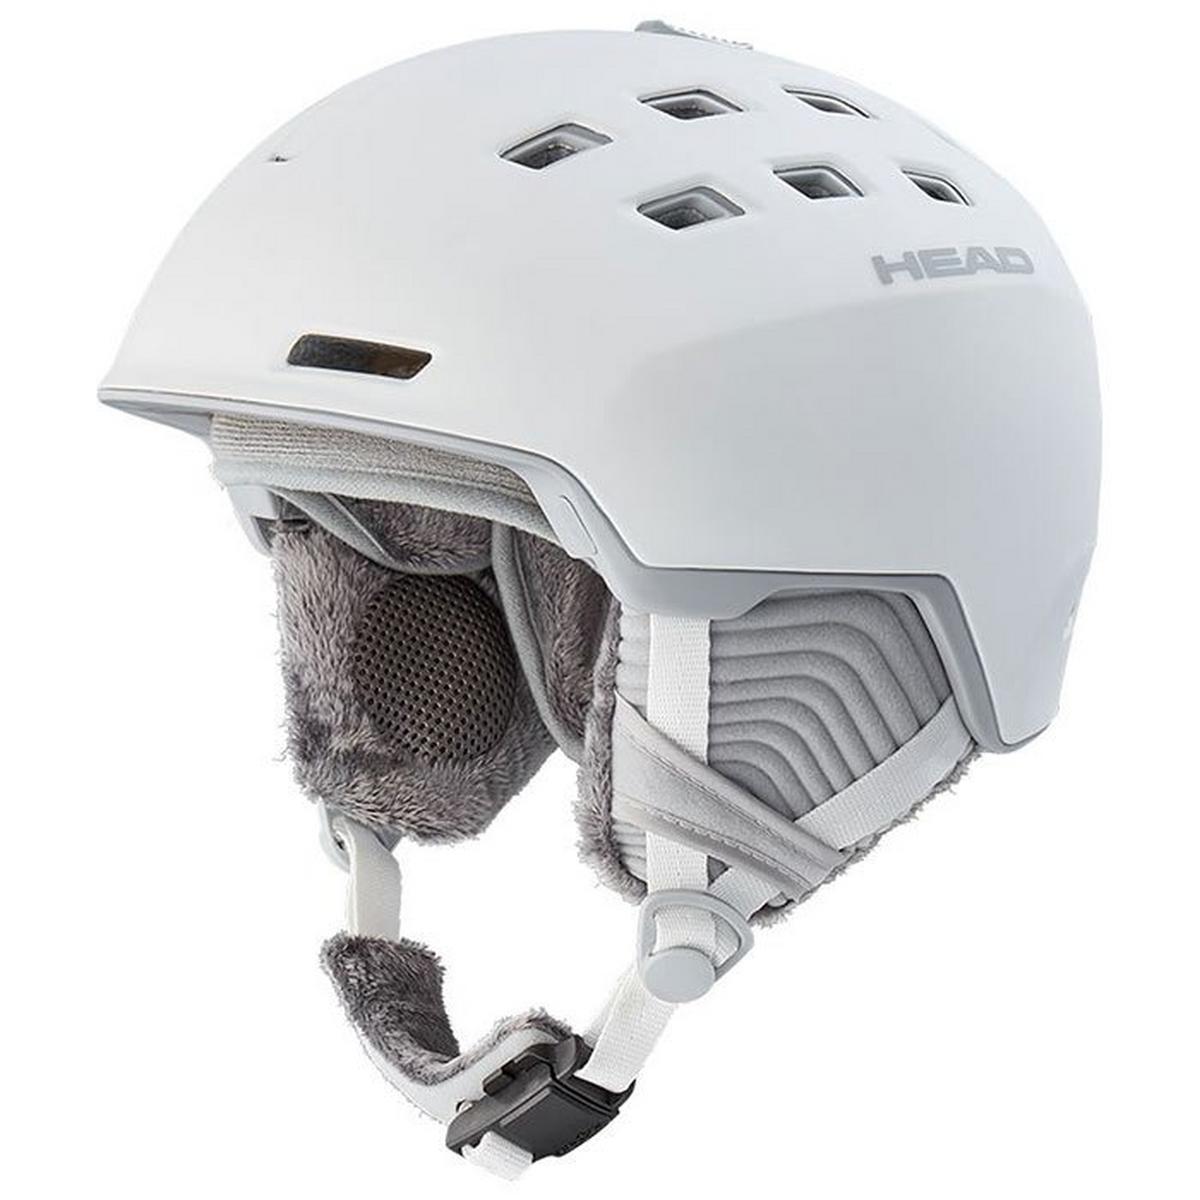 Rita Snow Helmet